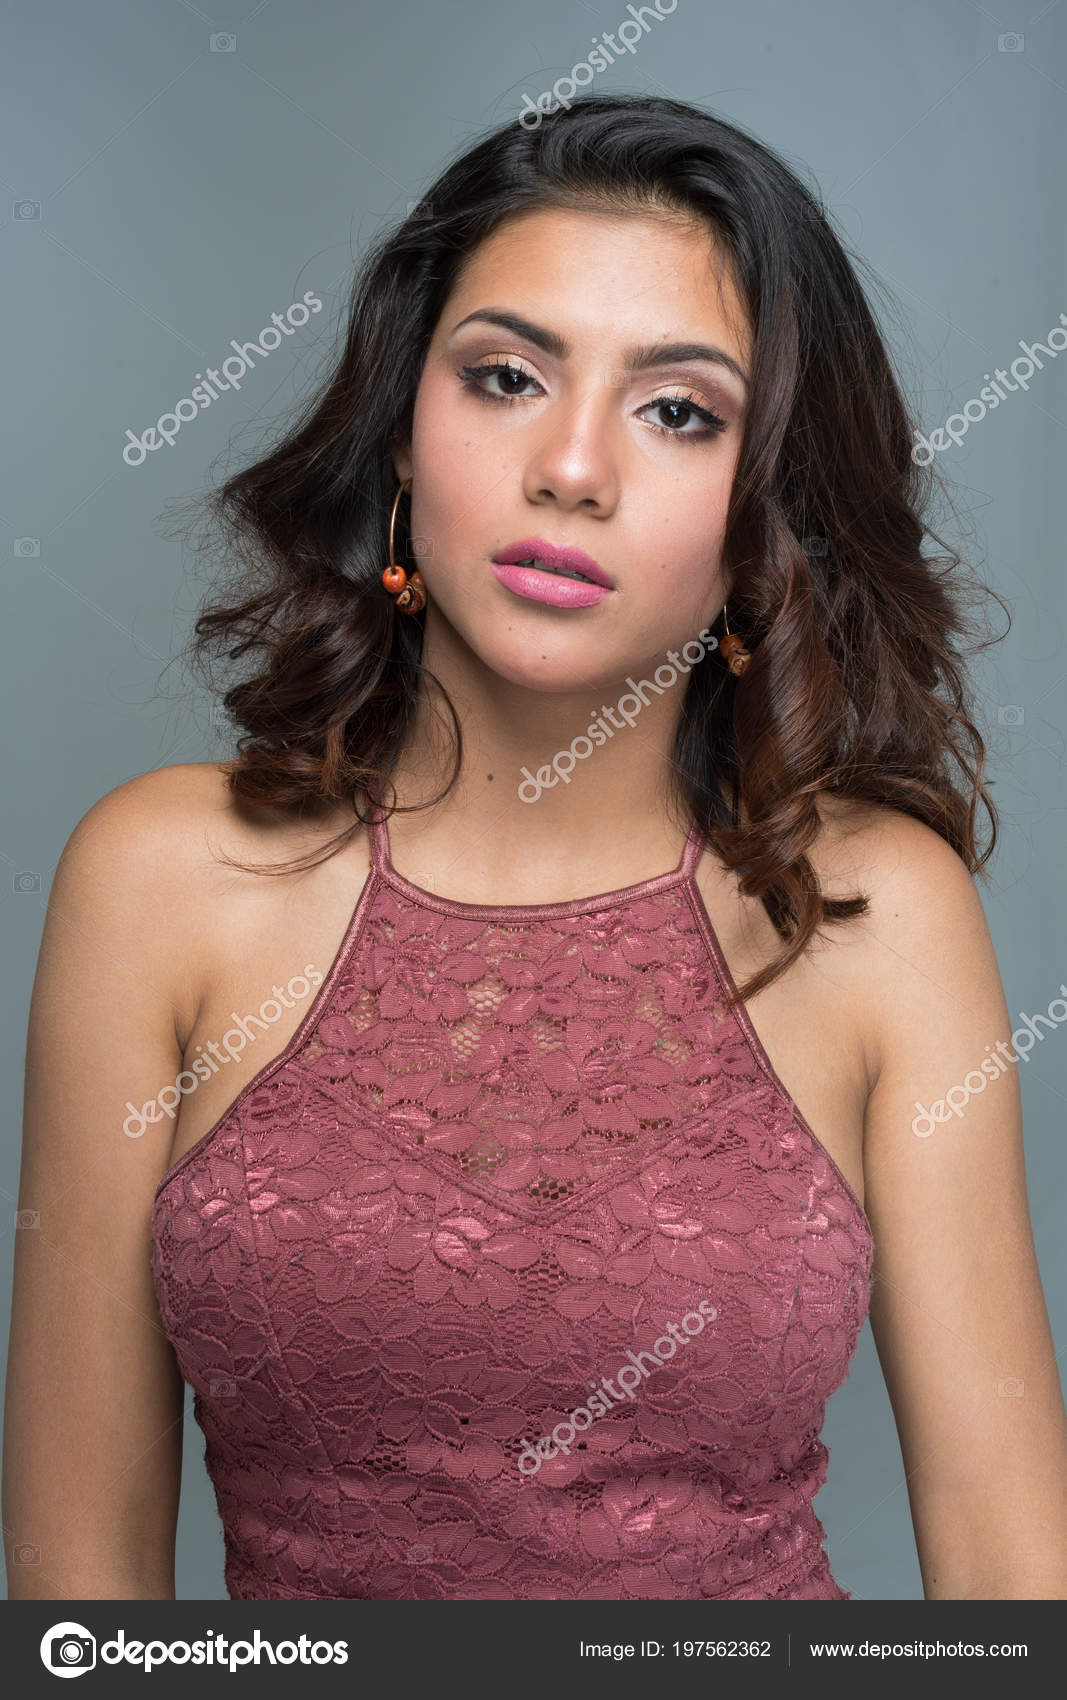 Latin teen girl model